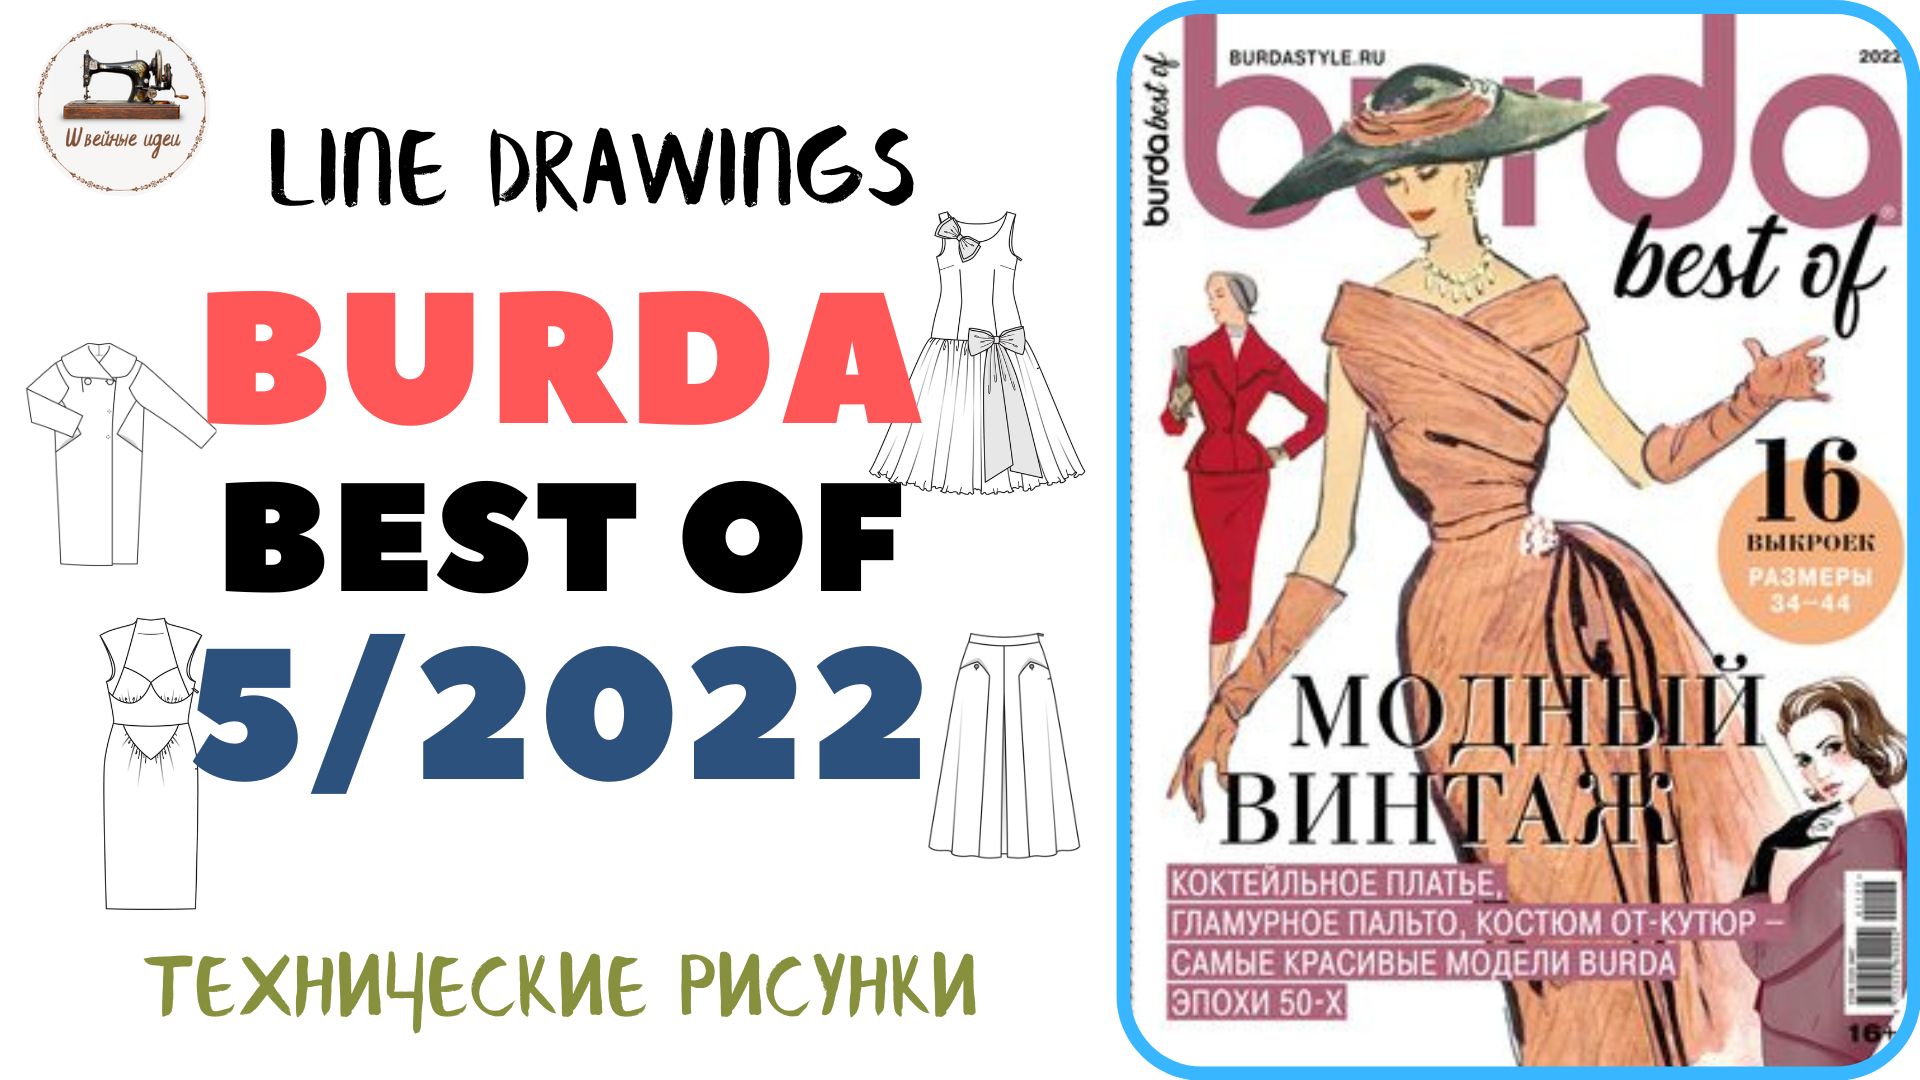 Burda Best of 5/2022/Технические рисунки. Vintage